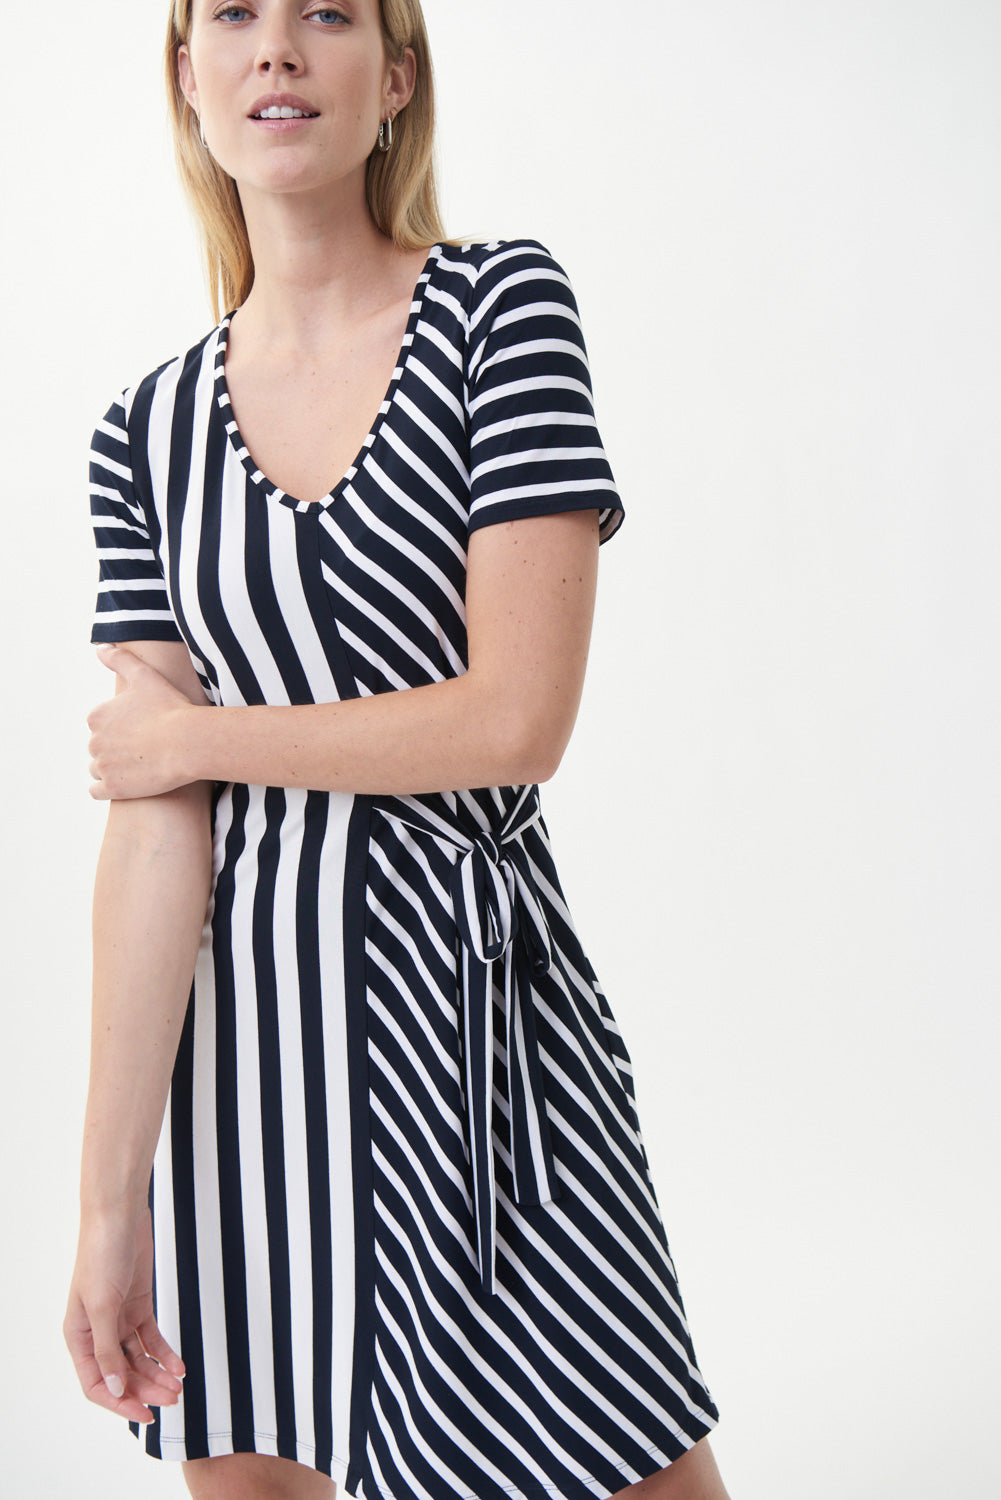 Joseph Ribkoff Midnight Blue-Vanilla Mixed Stripe Dress Style 222139